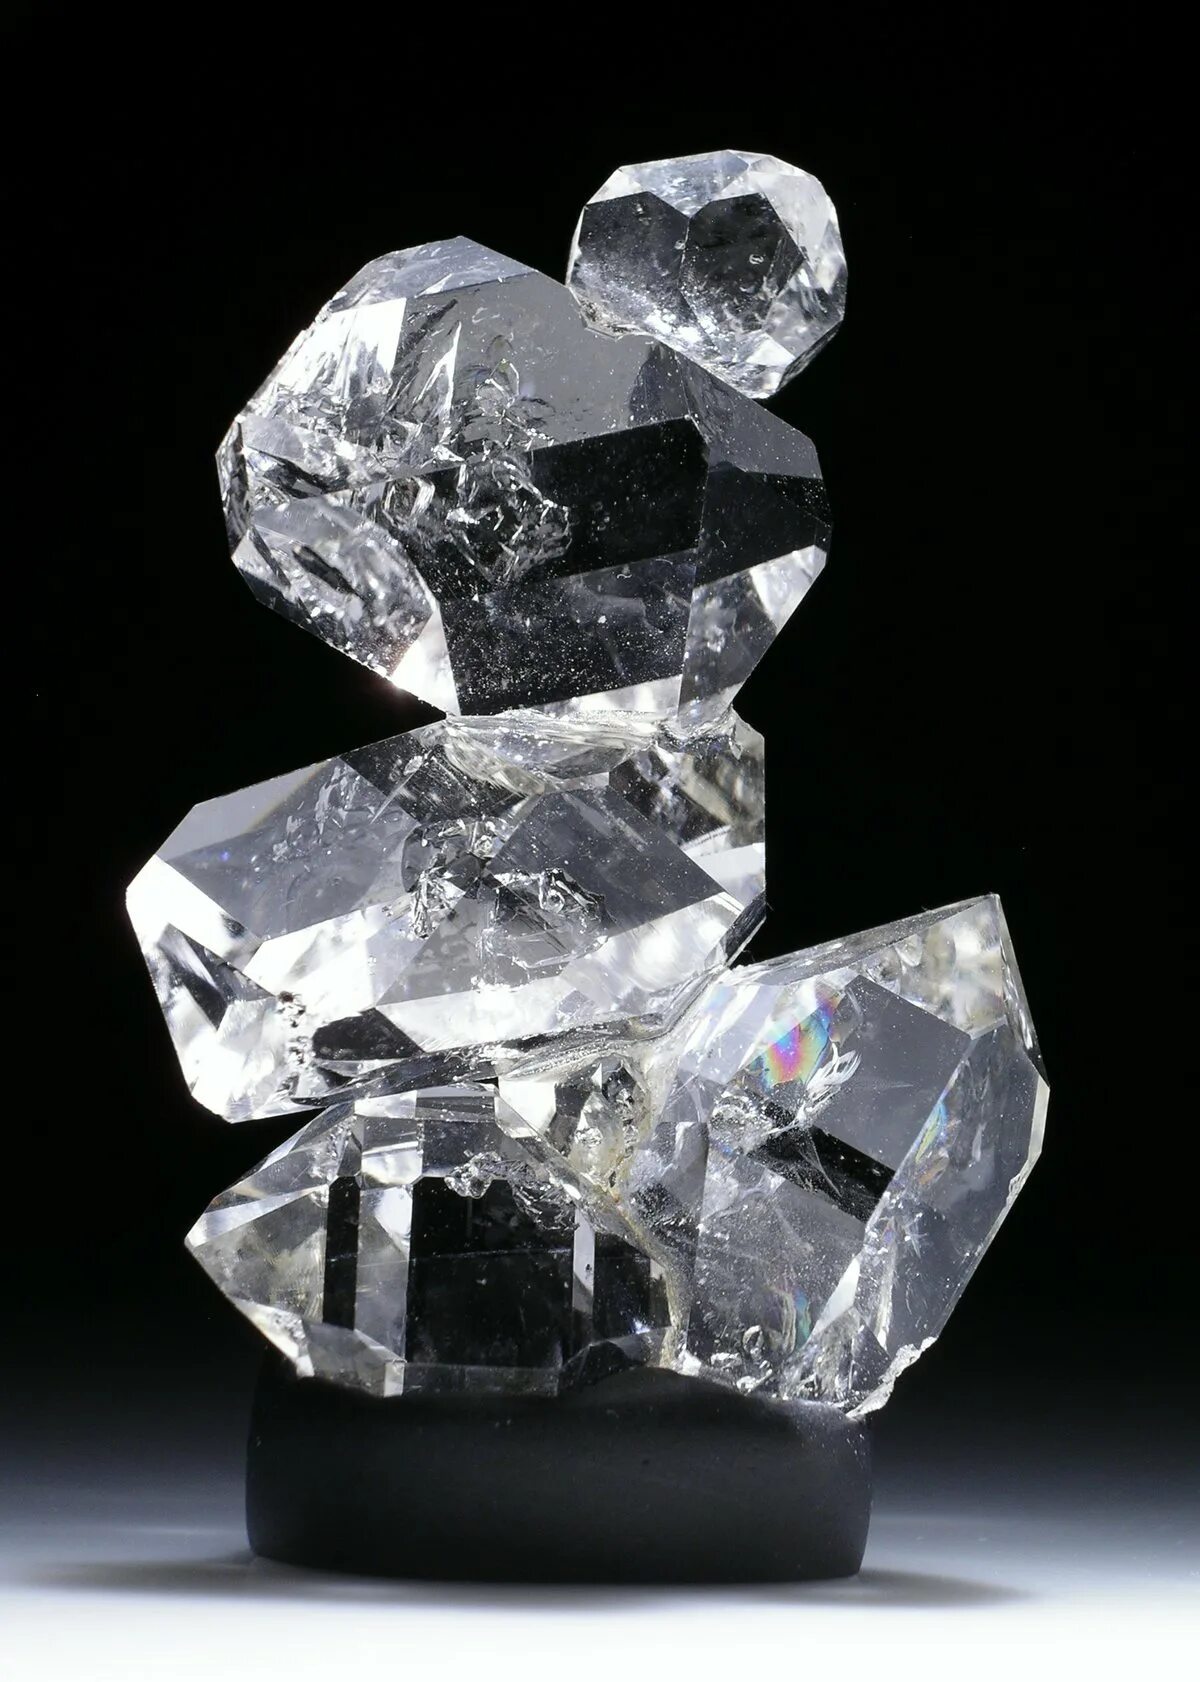 Diamond crystal. Алмаз Кристалл неграненый. Herkimer Diamond. Кристалл алмаза октаэдр. Мата́рский Алмаз.